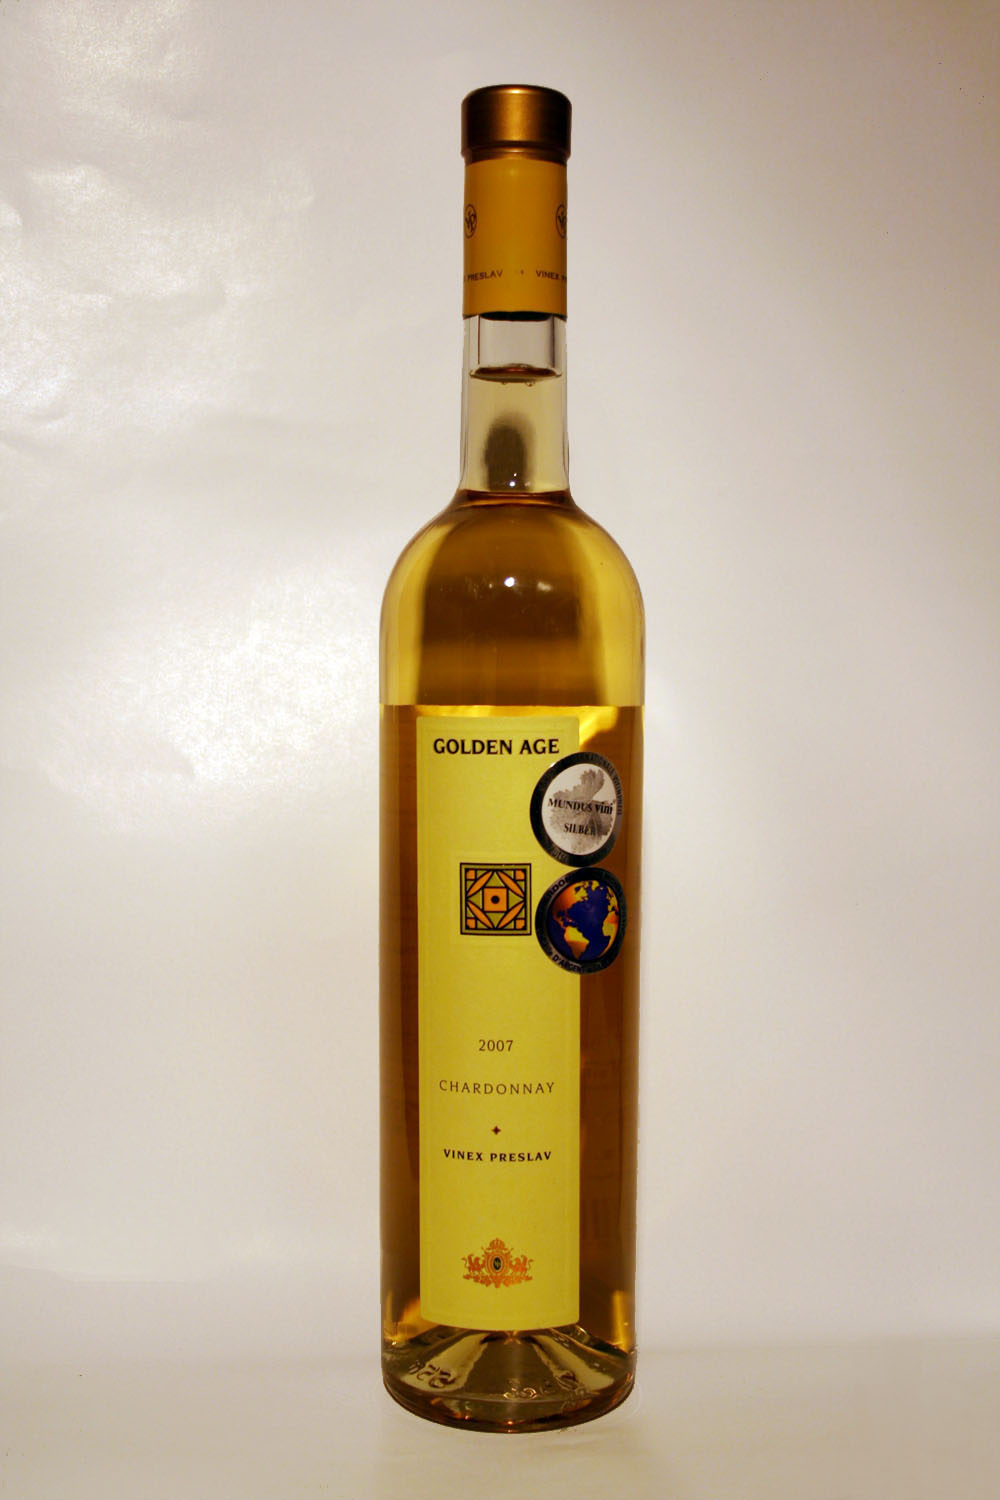 Golden Age Chardonnay 2007